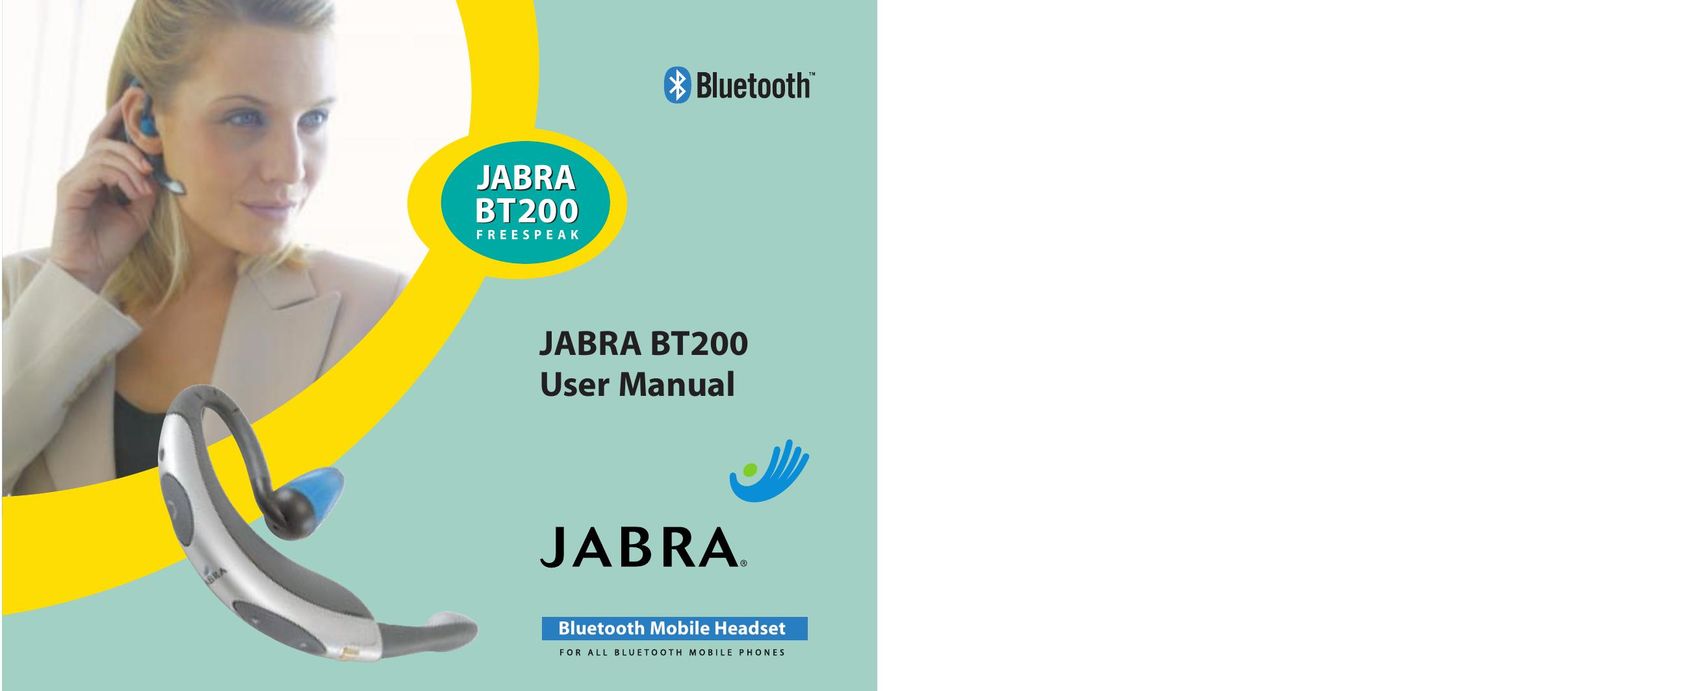 Jabra BT200 Headphones User Manual